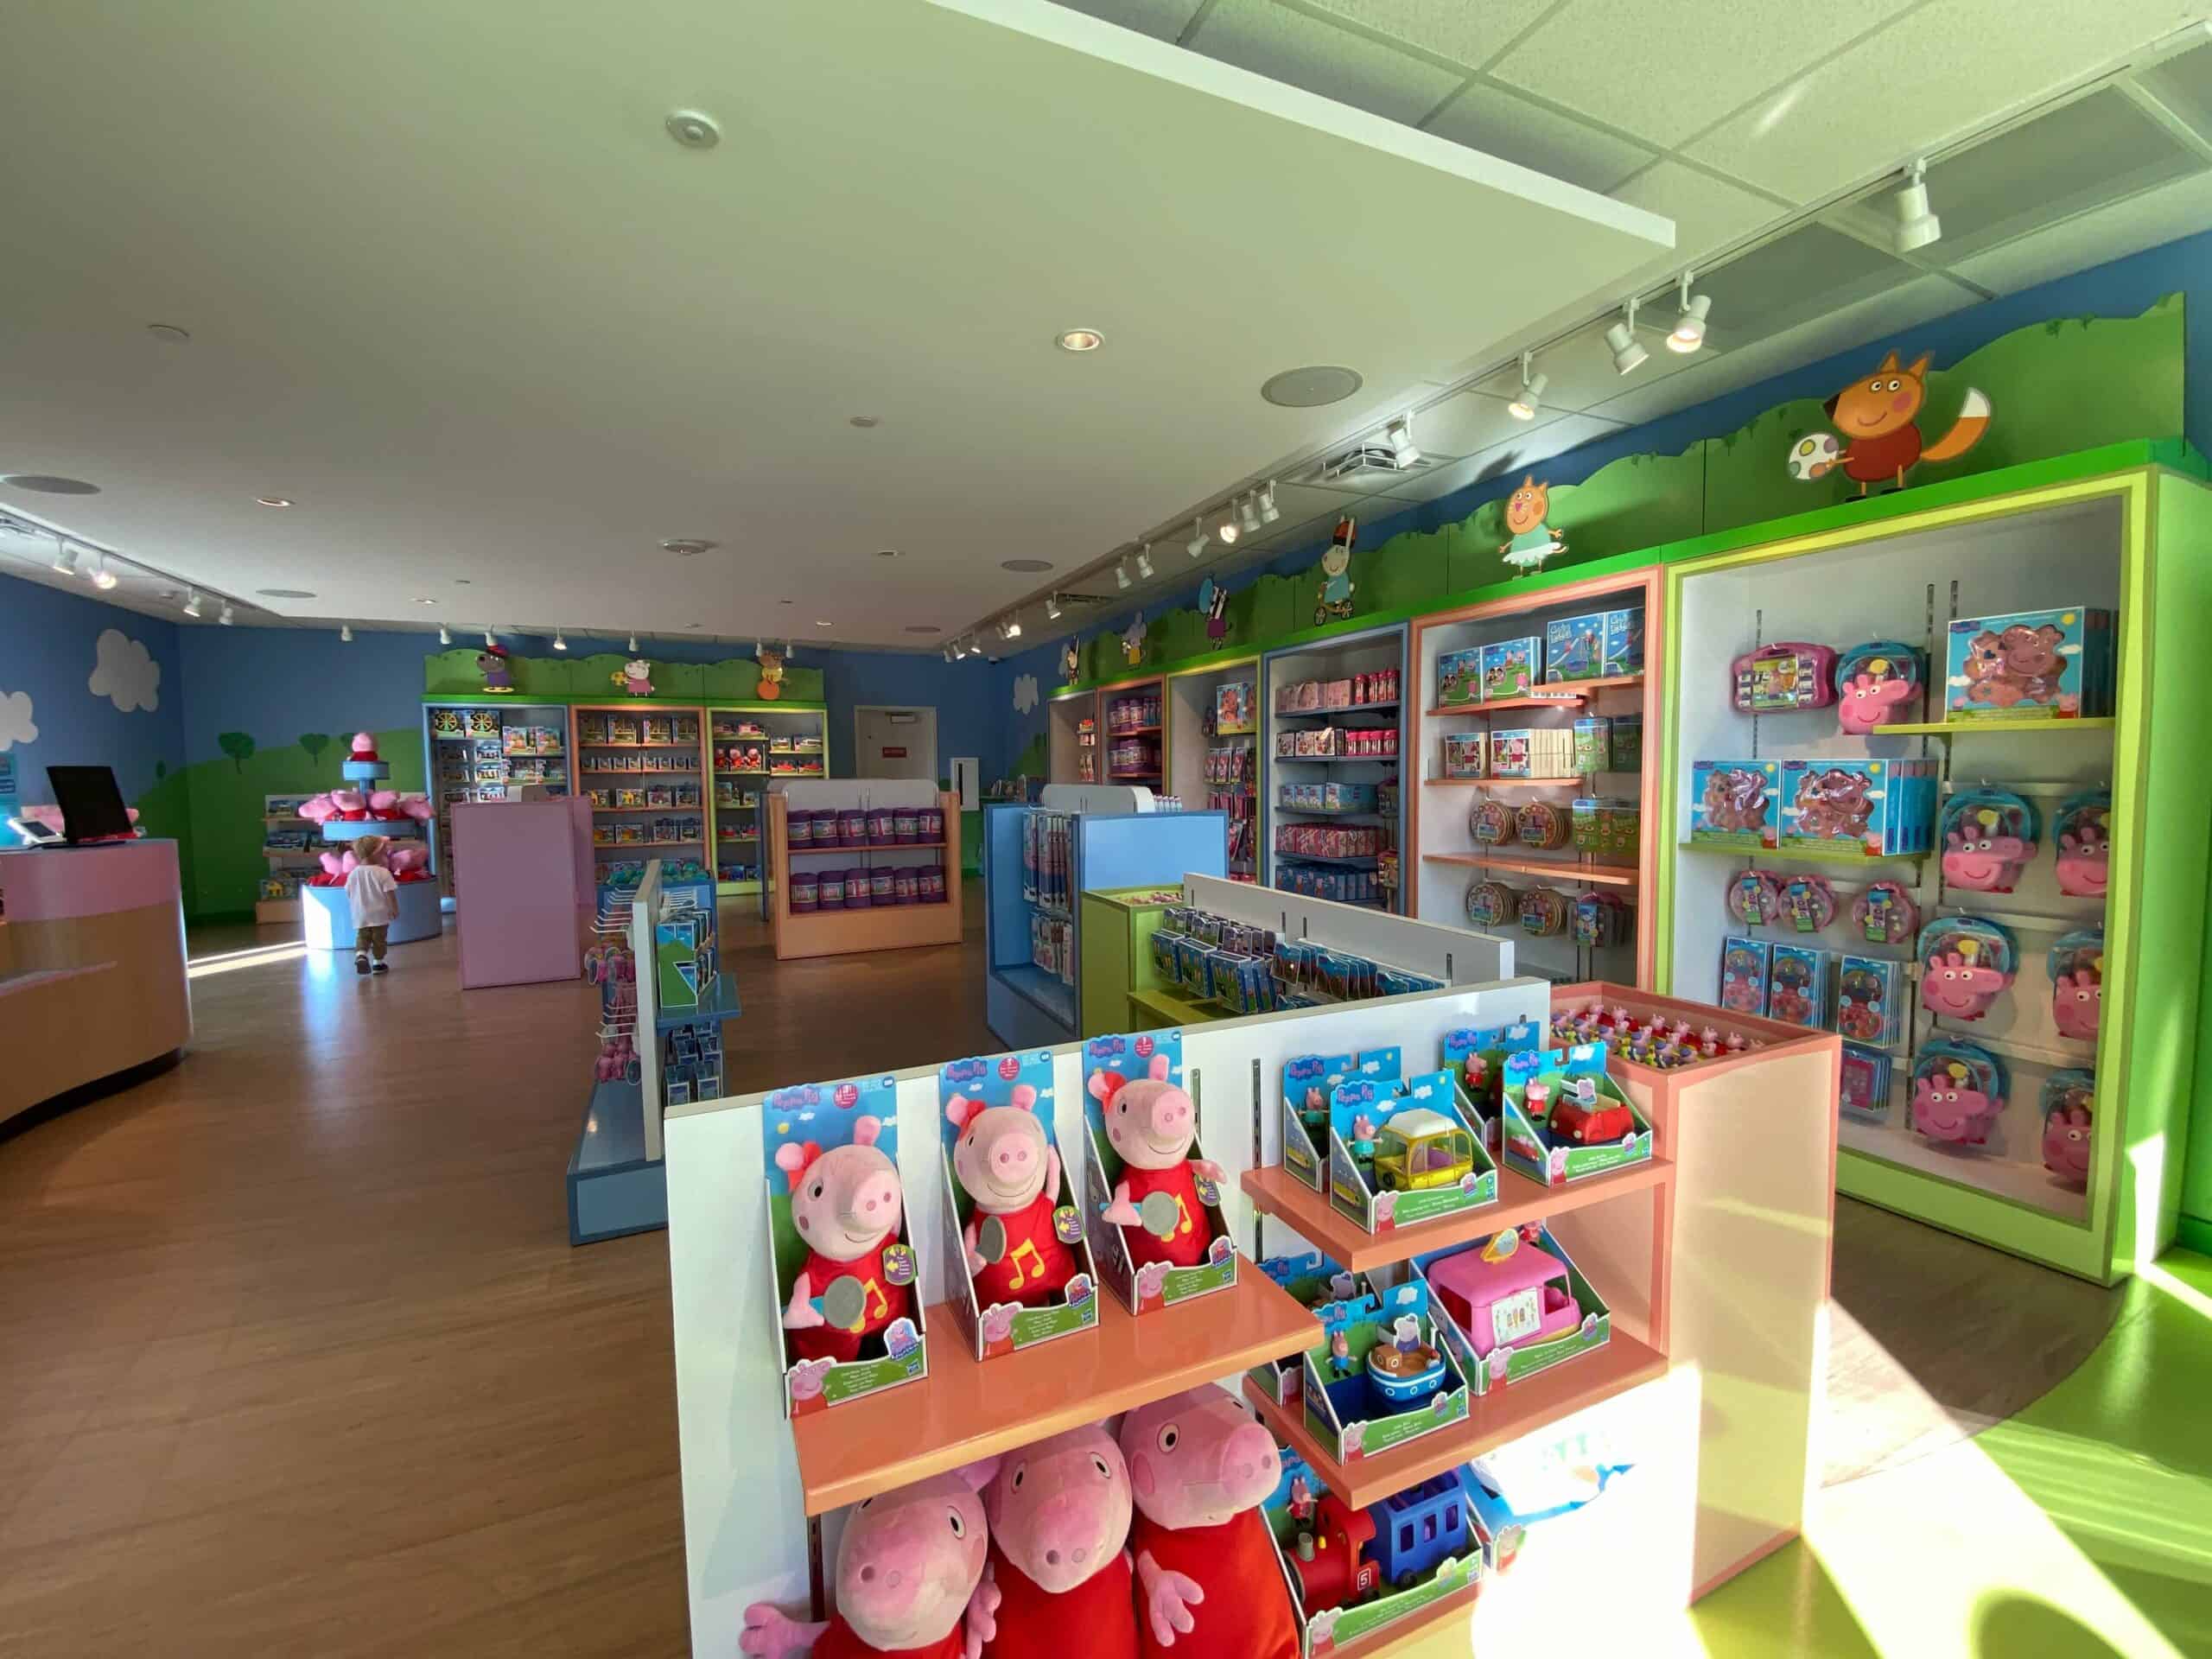 Peppa Pig merchandise lines the shelves of Mr. Fox's Shop at Peppa Pig Theme Park Florida